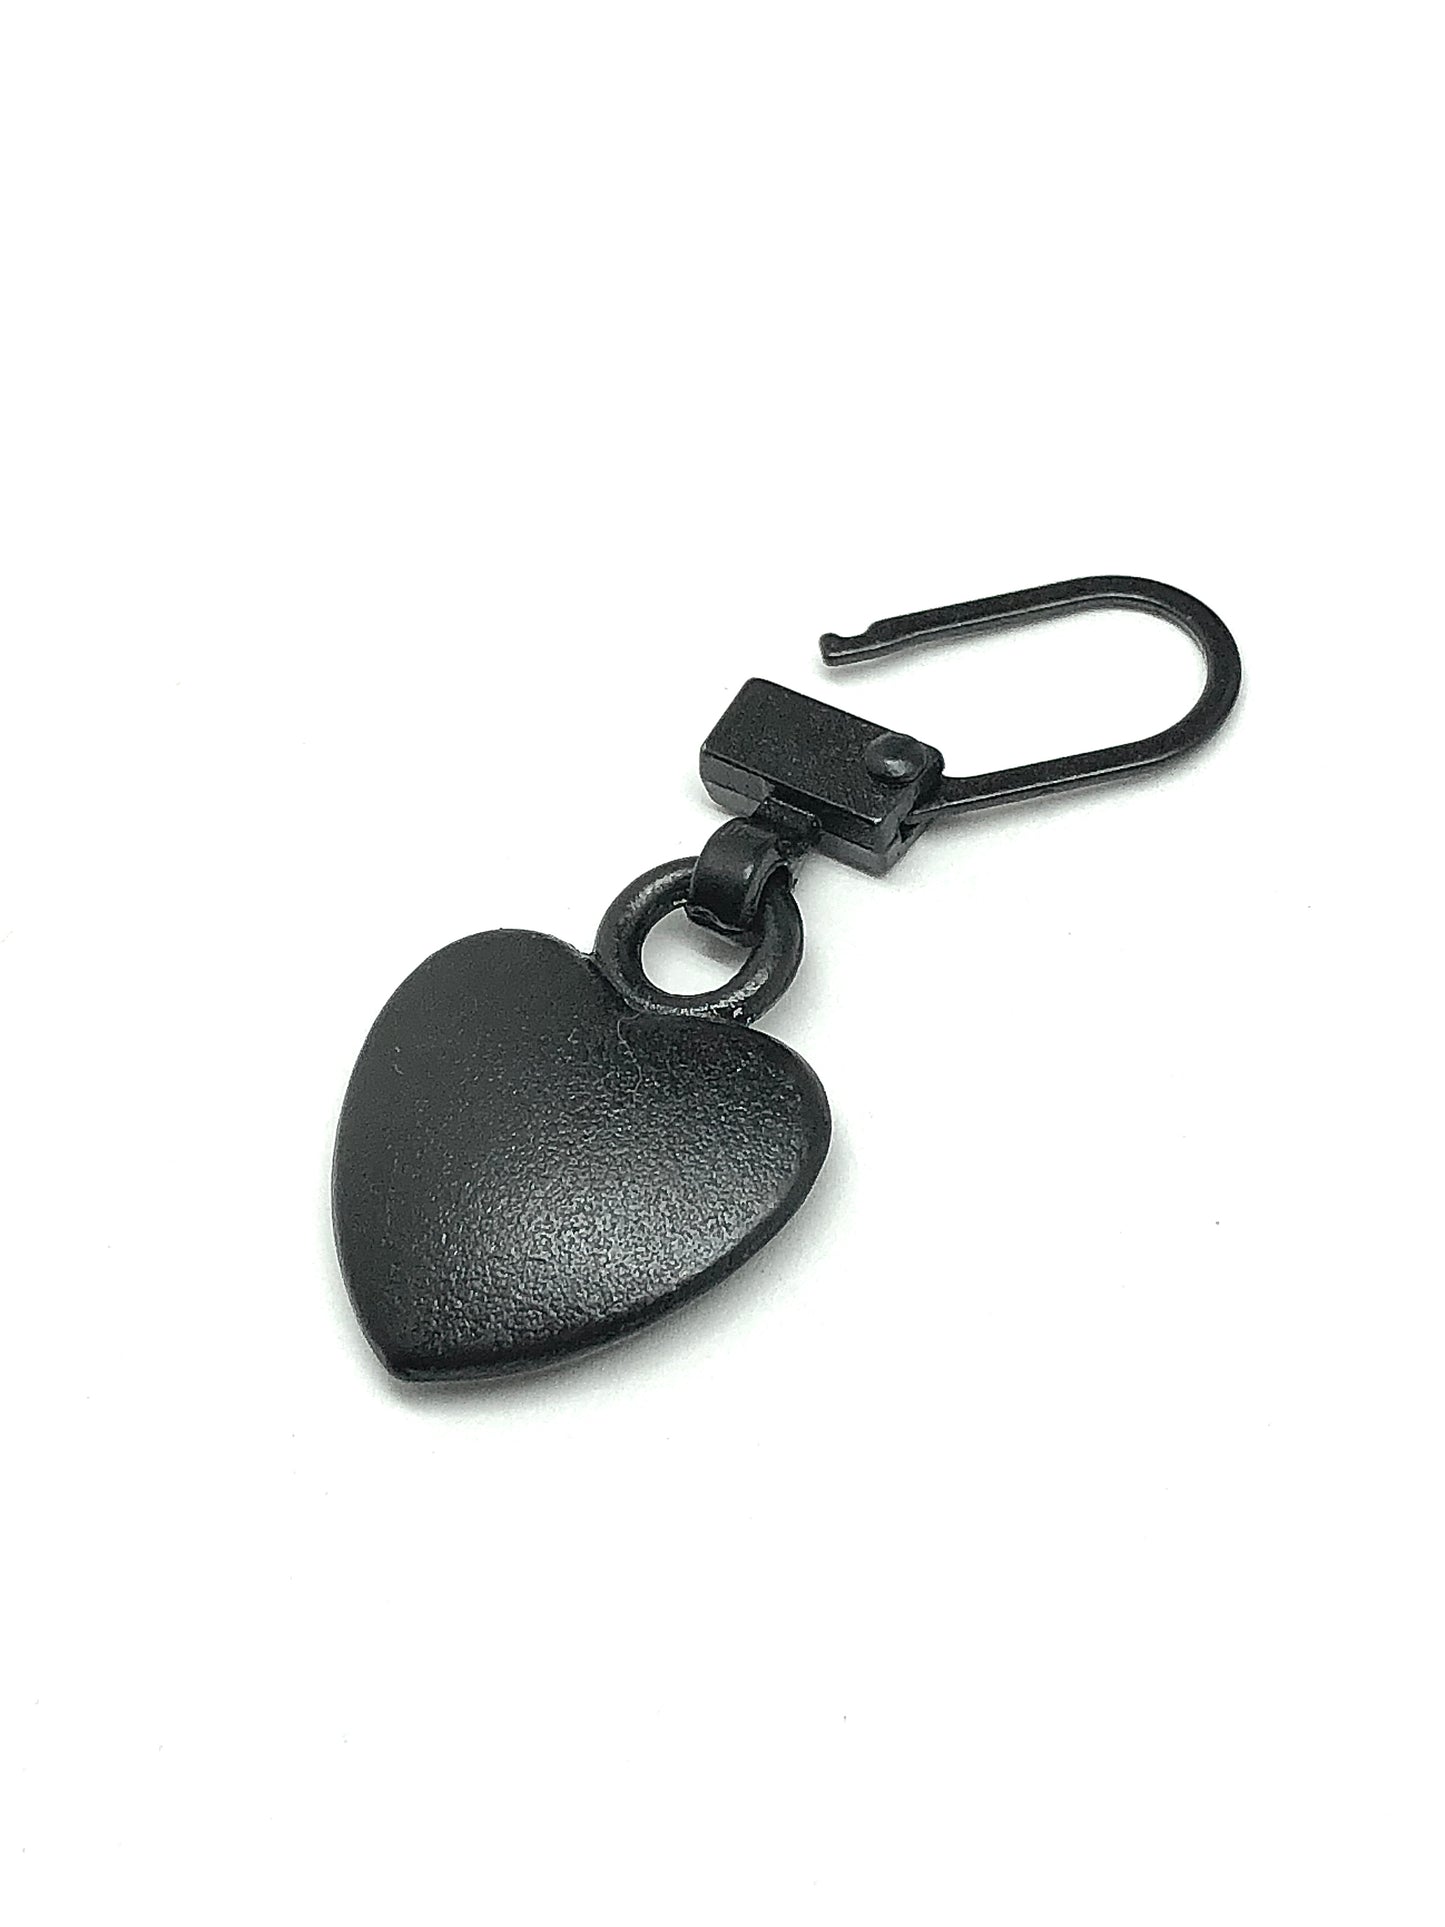 Zipper Repair Charm - Black Heart Zipper Charm or Accessorize anything it can clip onto! | Blingschlingers USA